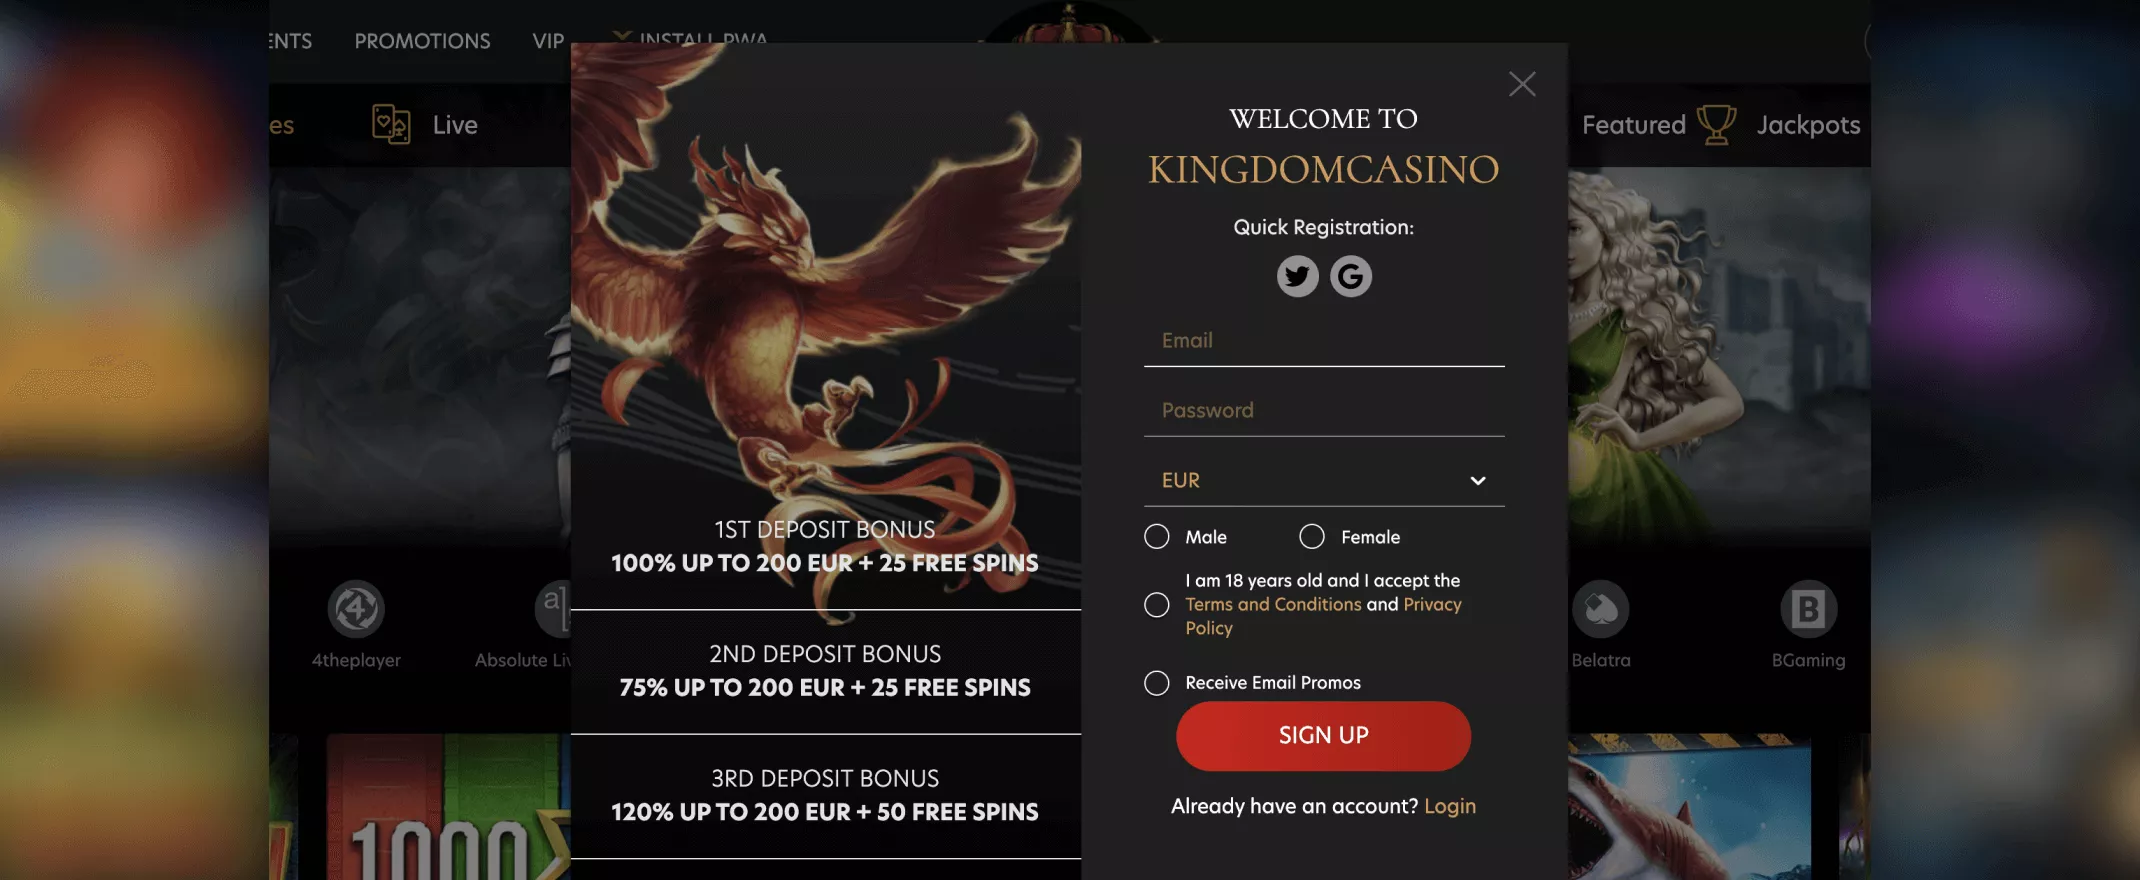 Kingdom casino registration screenshot